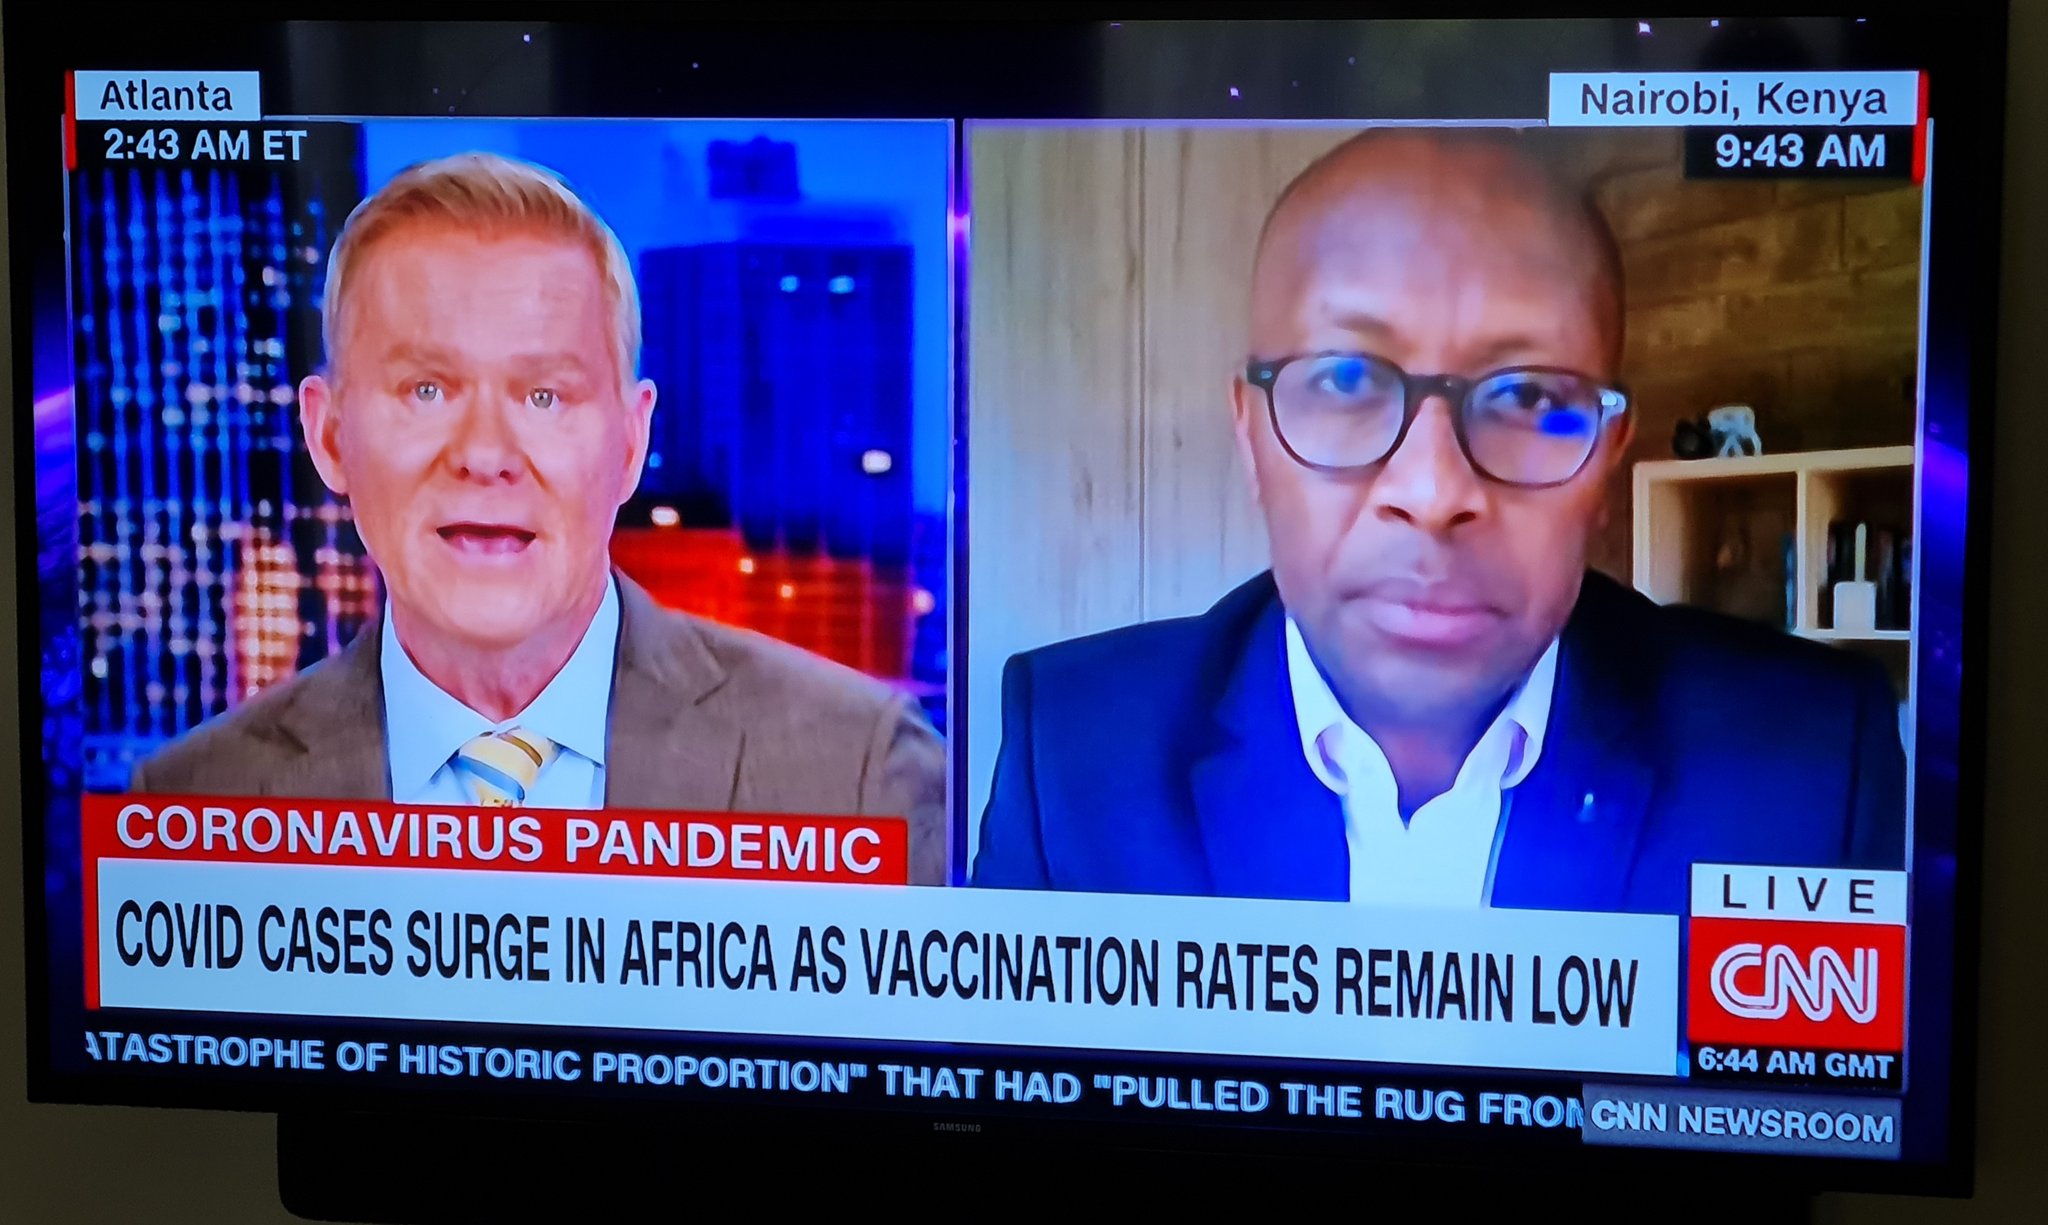 Amref Health Africa Global CEO, Dr. Githinji Gitahi on CNN International advocating for #VaccineEquity